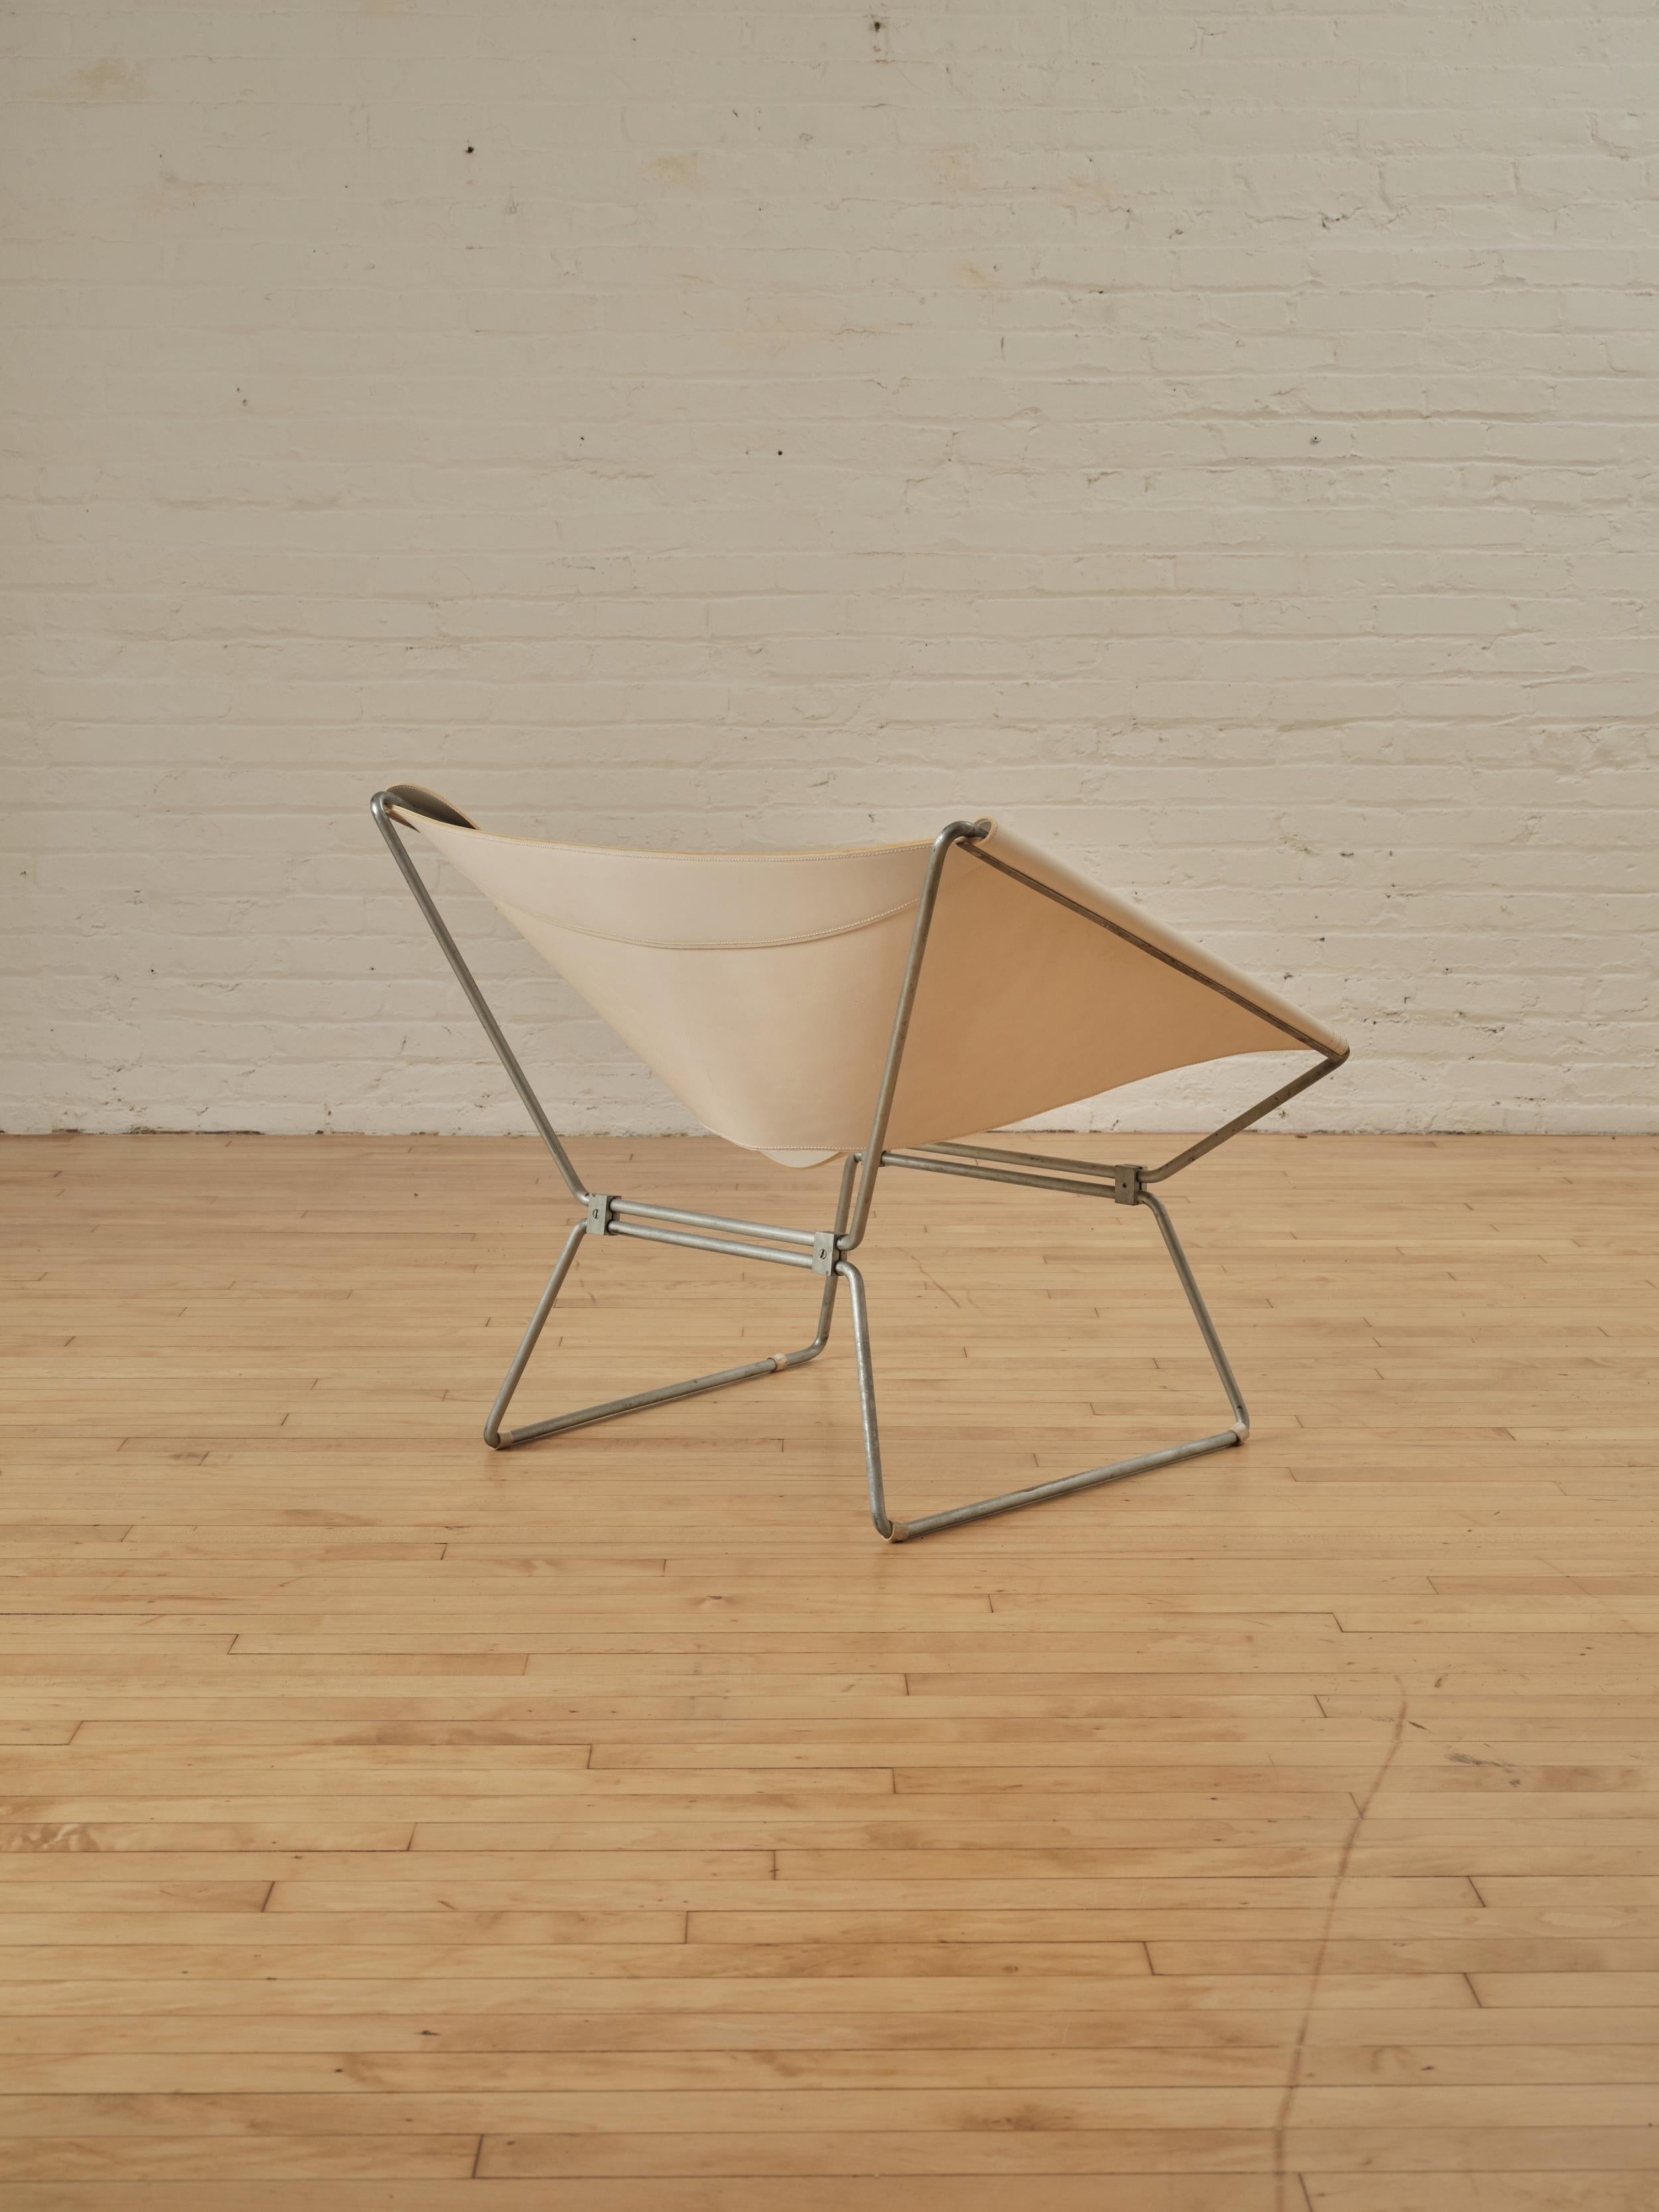 20th Century Anneau Chair by Pierre Paulin for AP Polak (Model Ap-14) For Sale